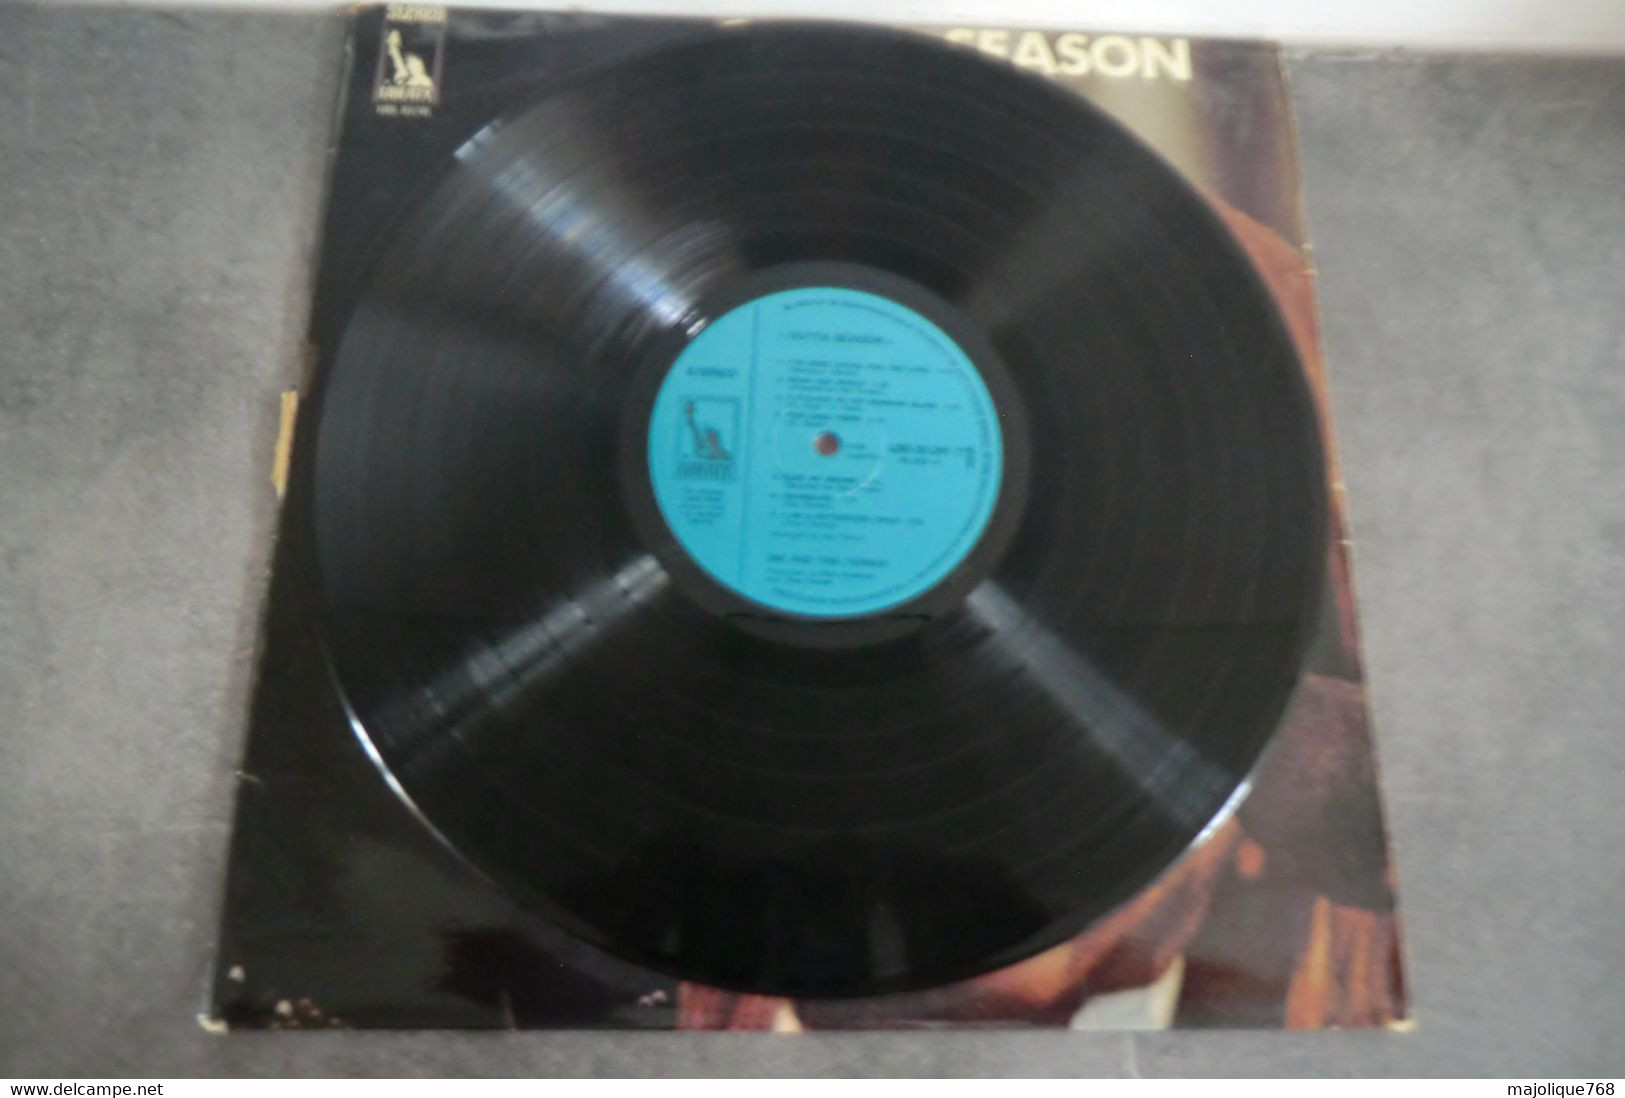 Disque De Ike And Tina Turner - Outta Season - Liberty LBS 83241 - France - Soul - R&B